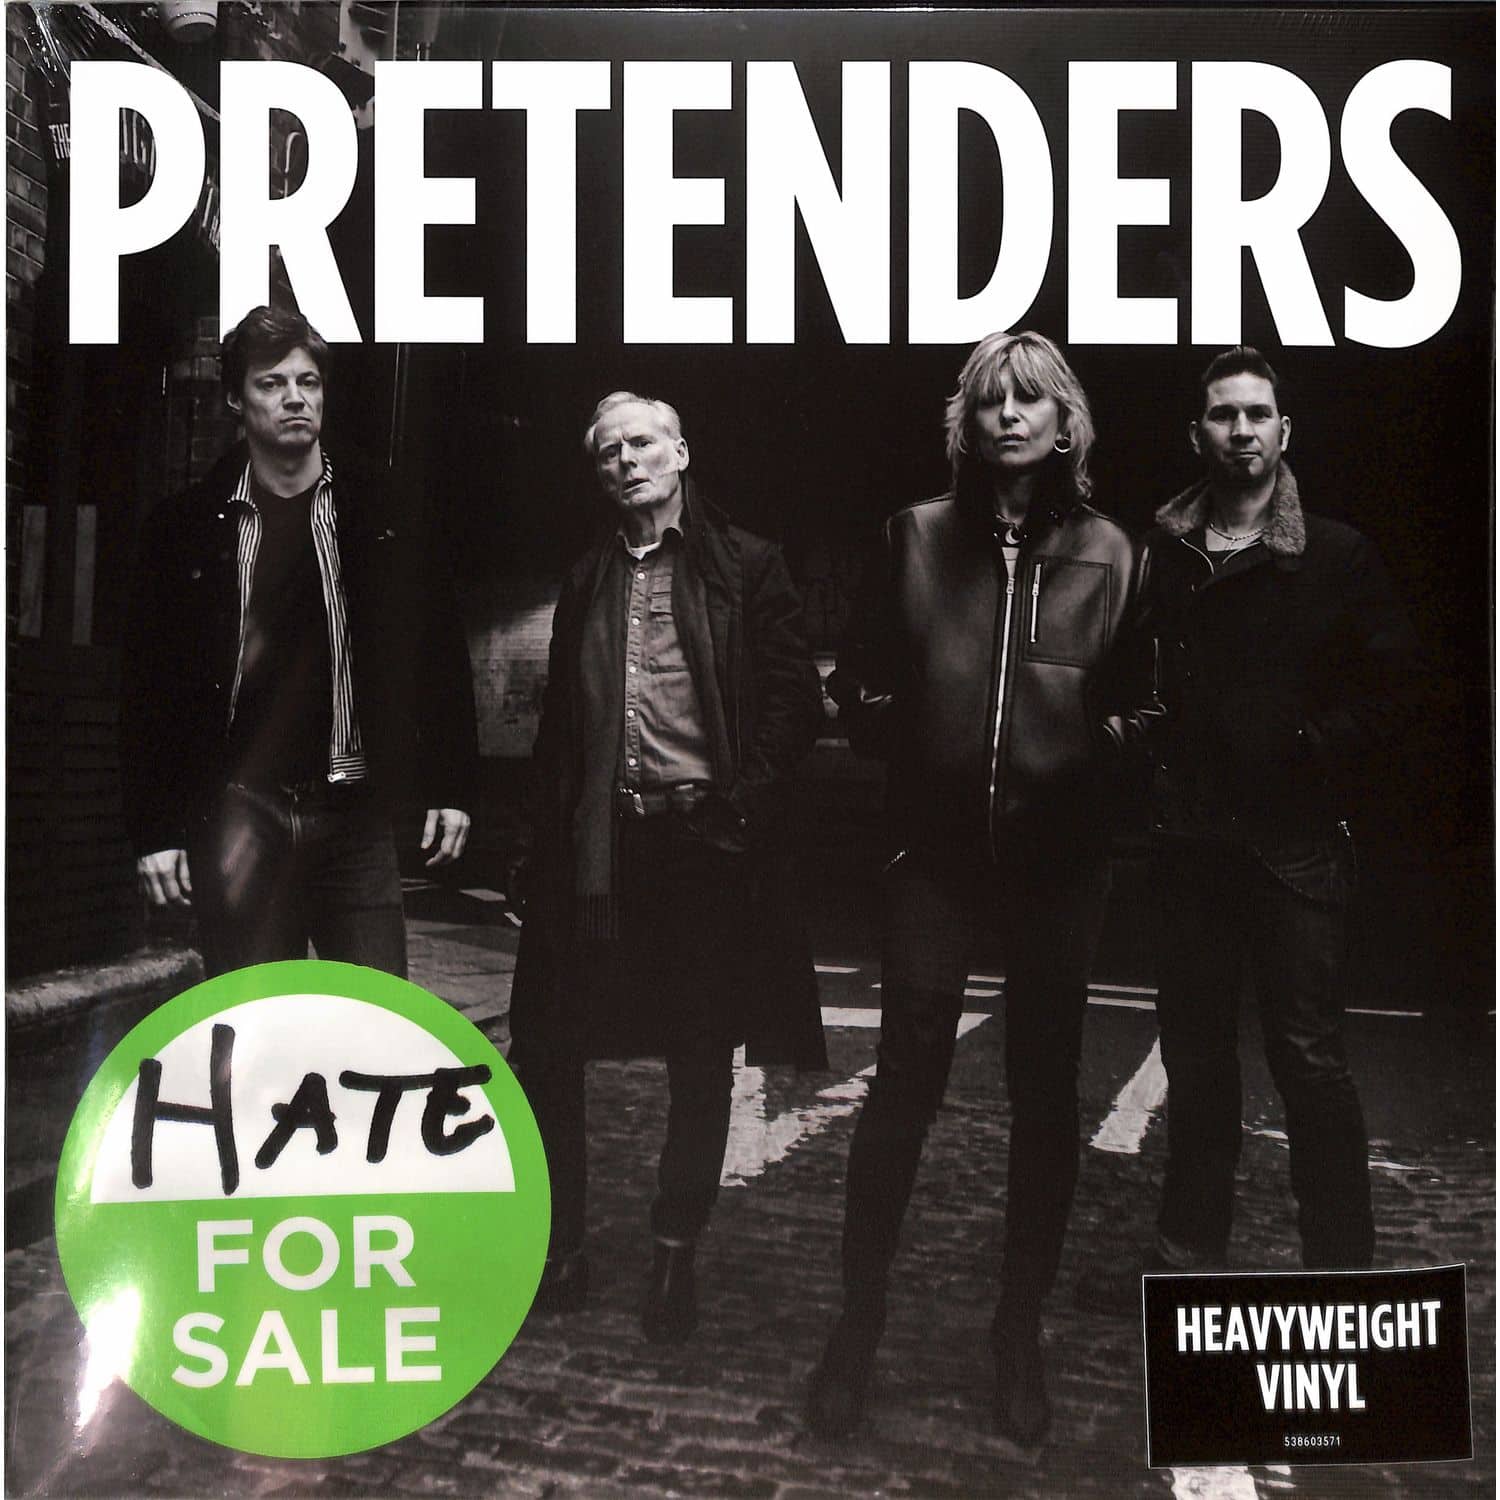 Pretenders - HATE FOR SALE 